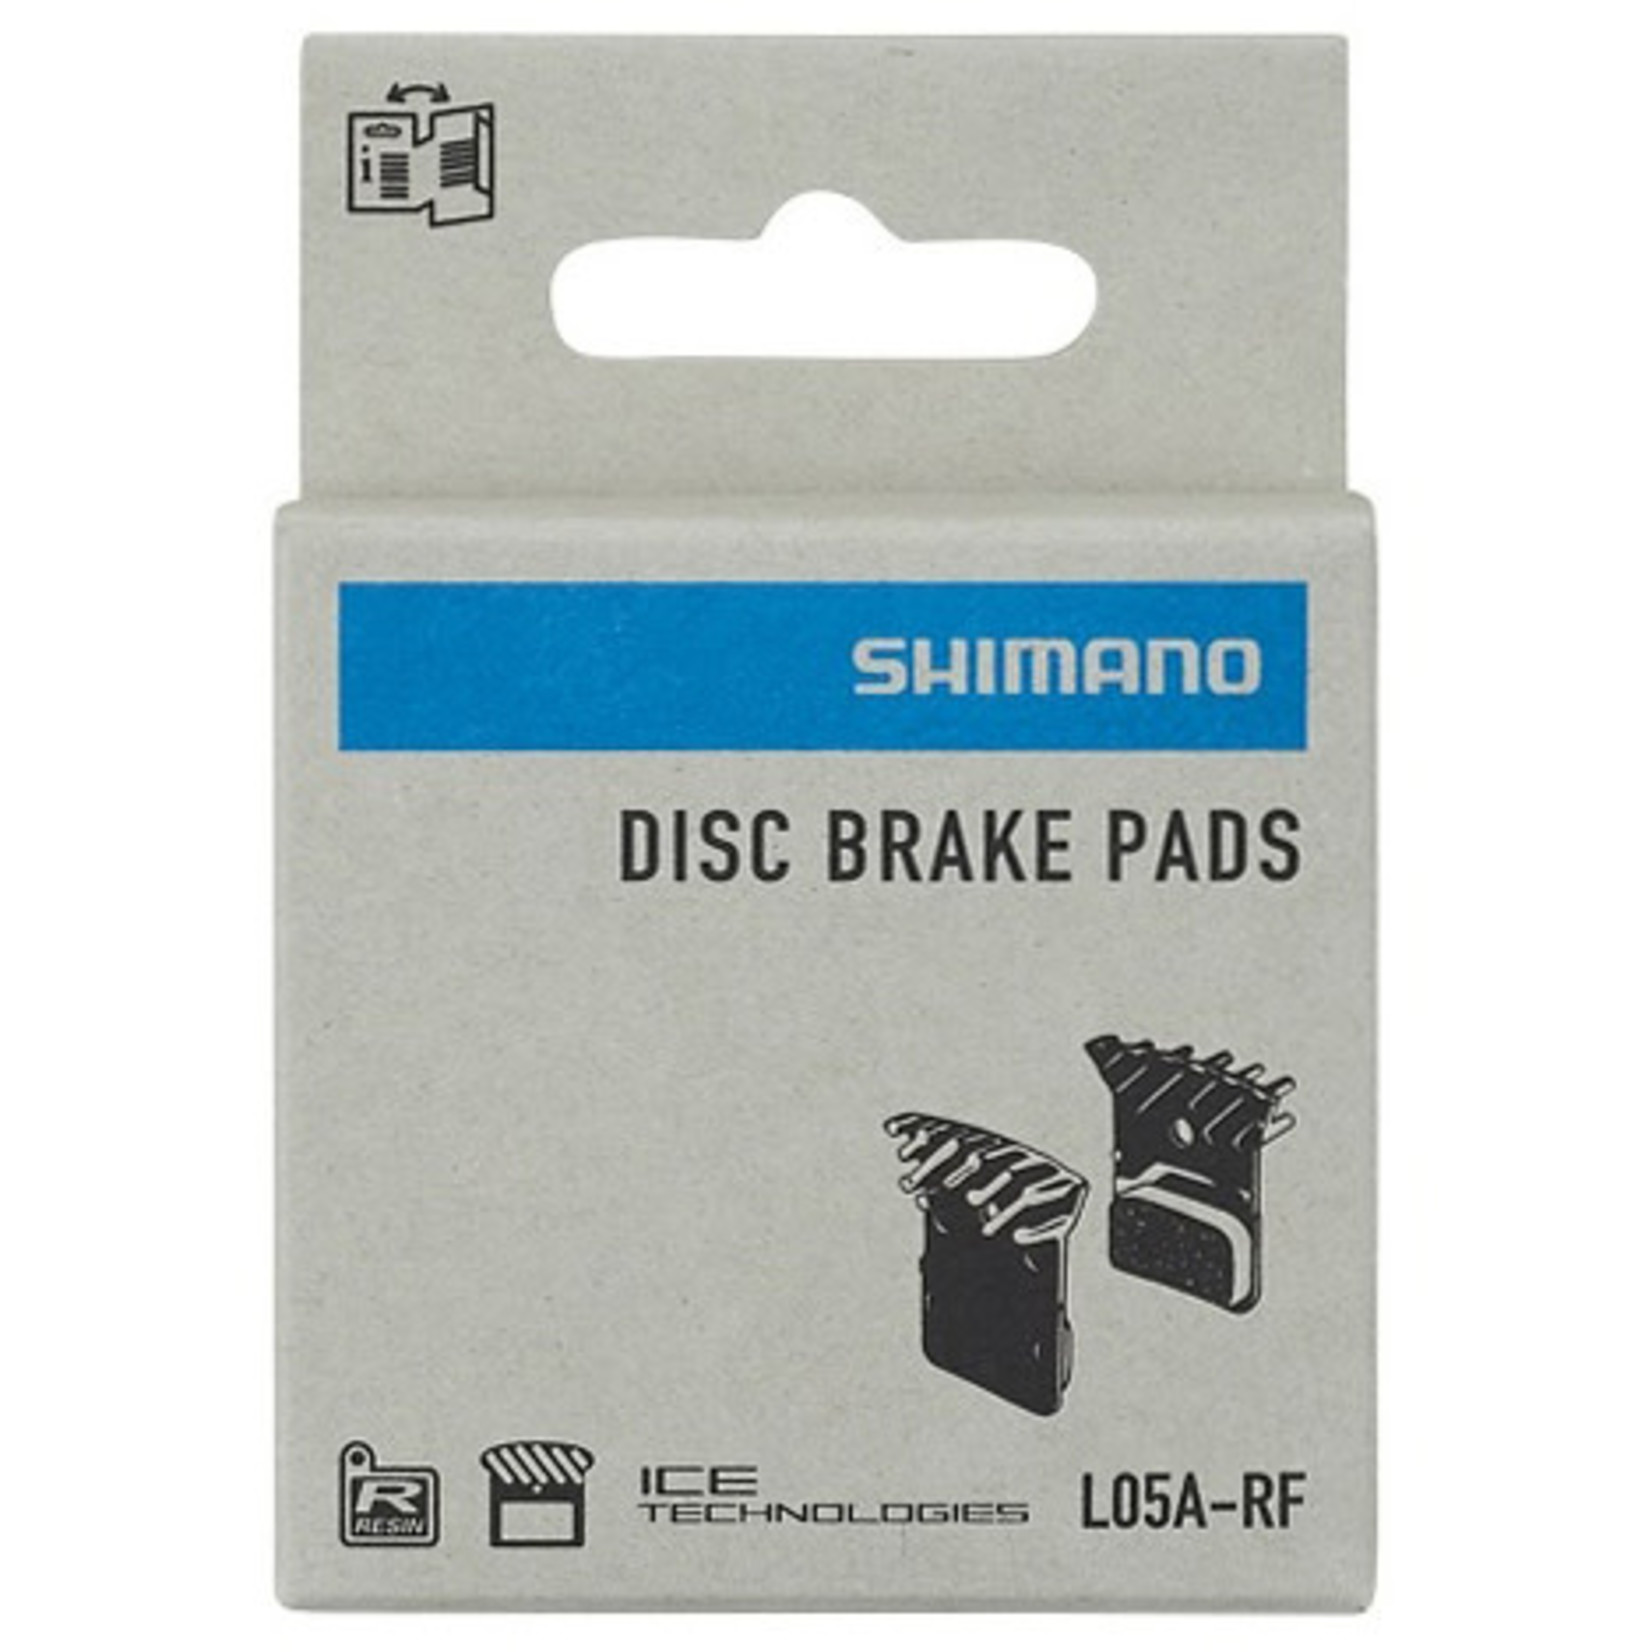 SHIMANO Shimano L05A-RF Resin Disc Pad  w/Fin for Flat Mount Road Calipers